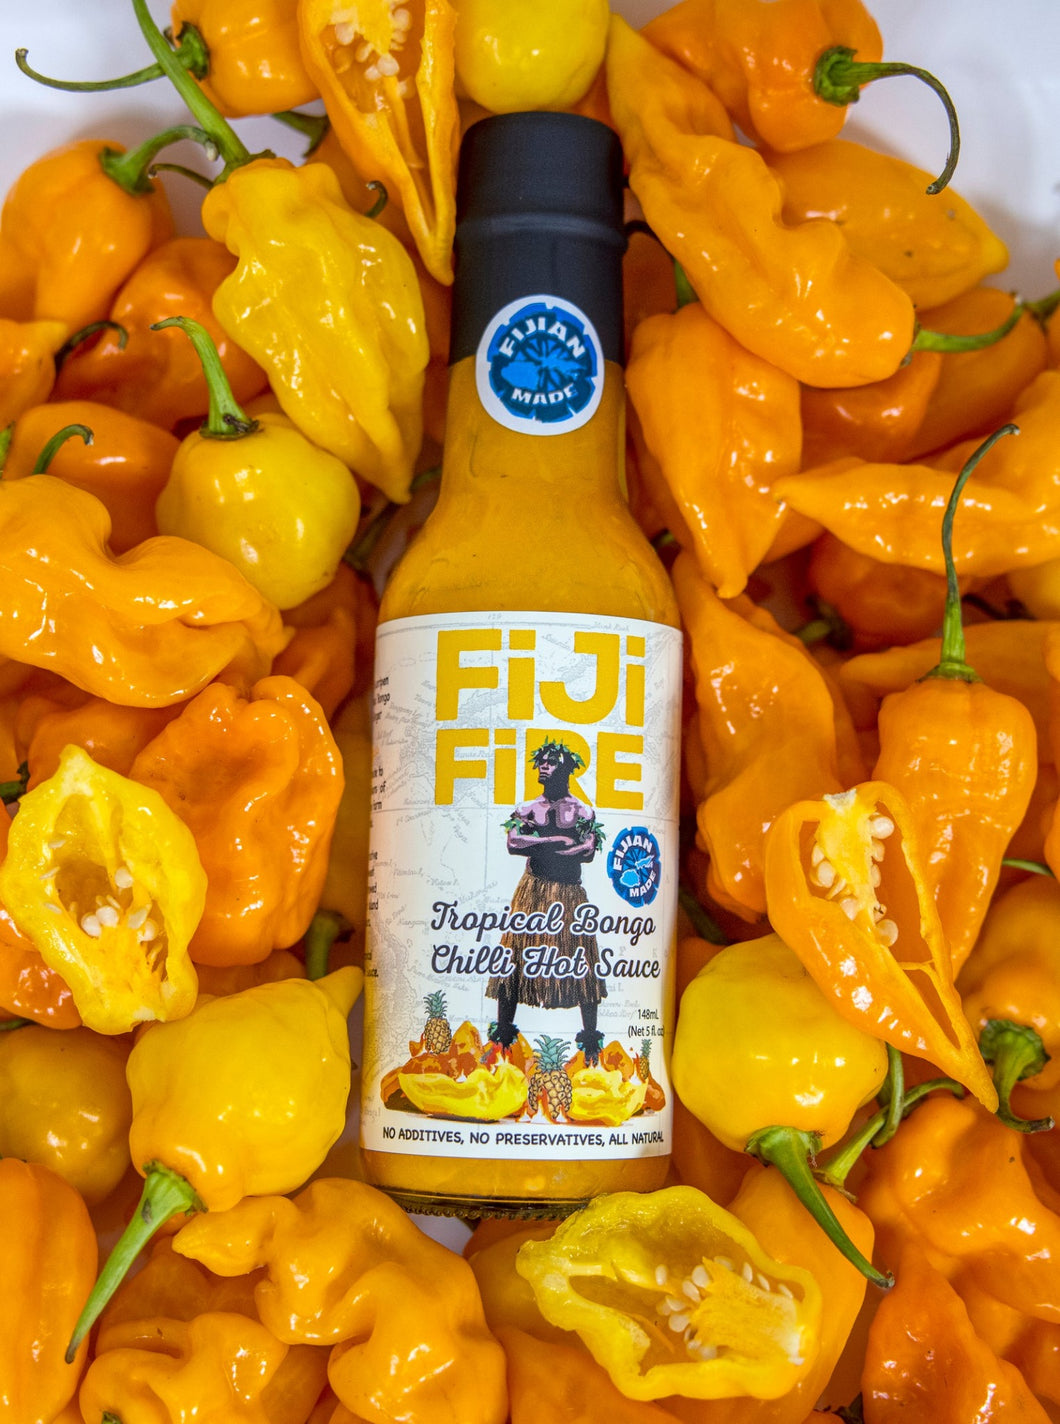 Fiji Fire Tropical Bongo Chilli Hot Sauce - FJD$